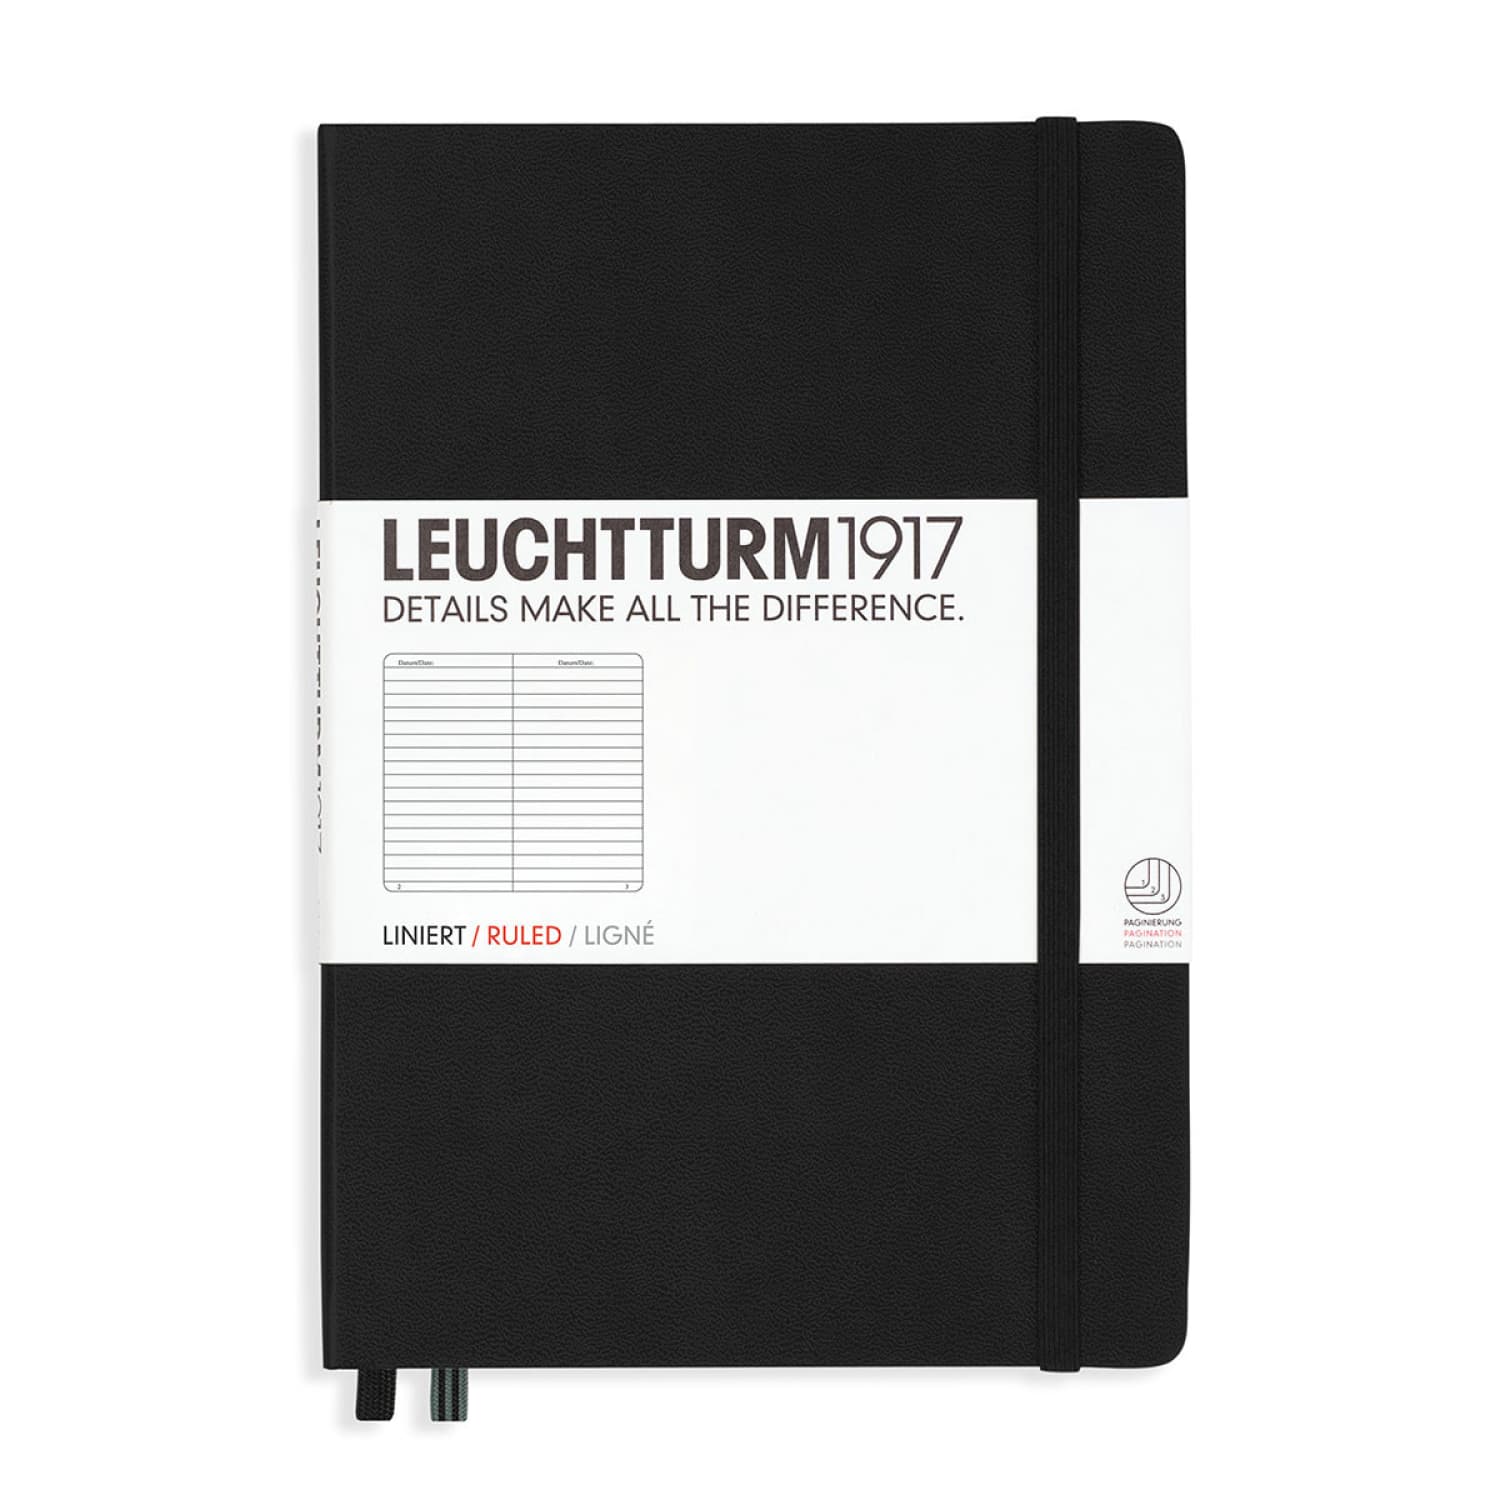 Leuchtturm1917 Notebooks & Accessories - The Goulet Pen Company